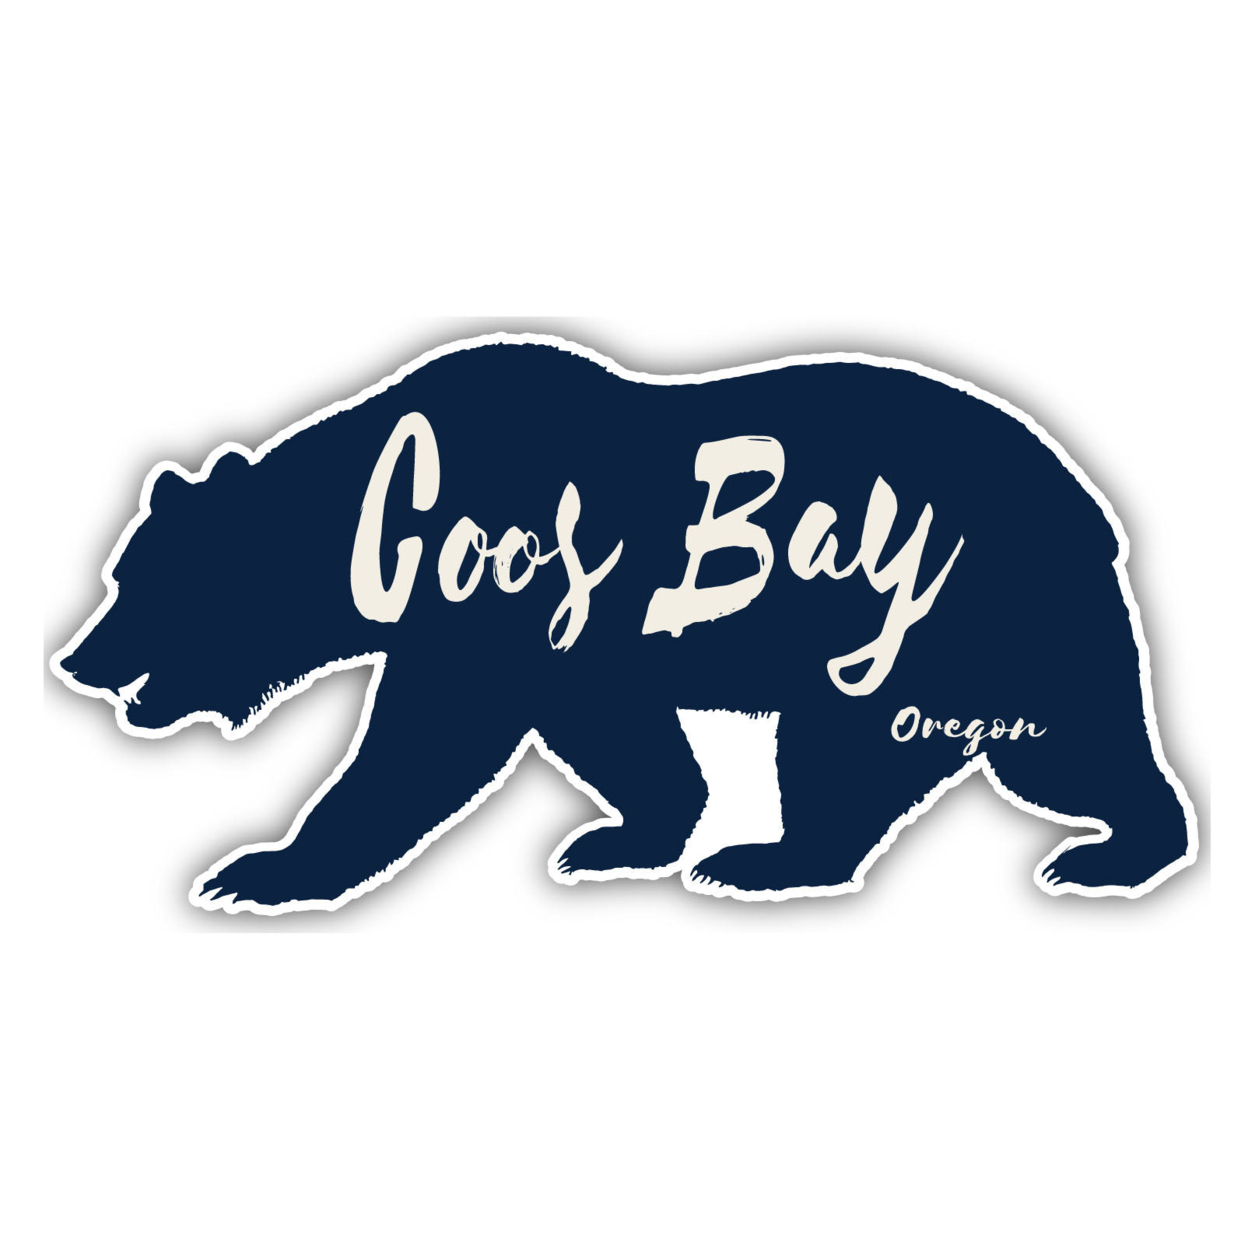 Coos Bay Oregon Souvenir Decorative Stickers (Choose Theme And Size) - Single Unit, 6-Inch, Bear